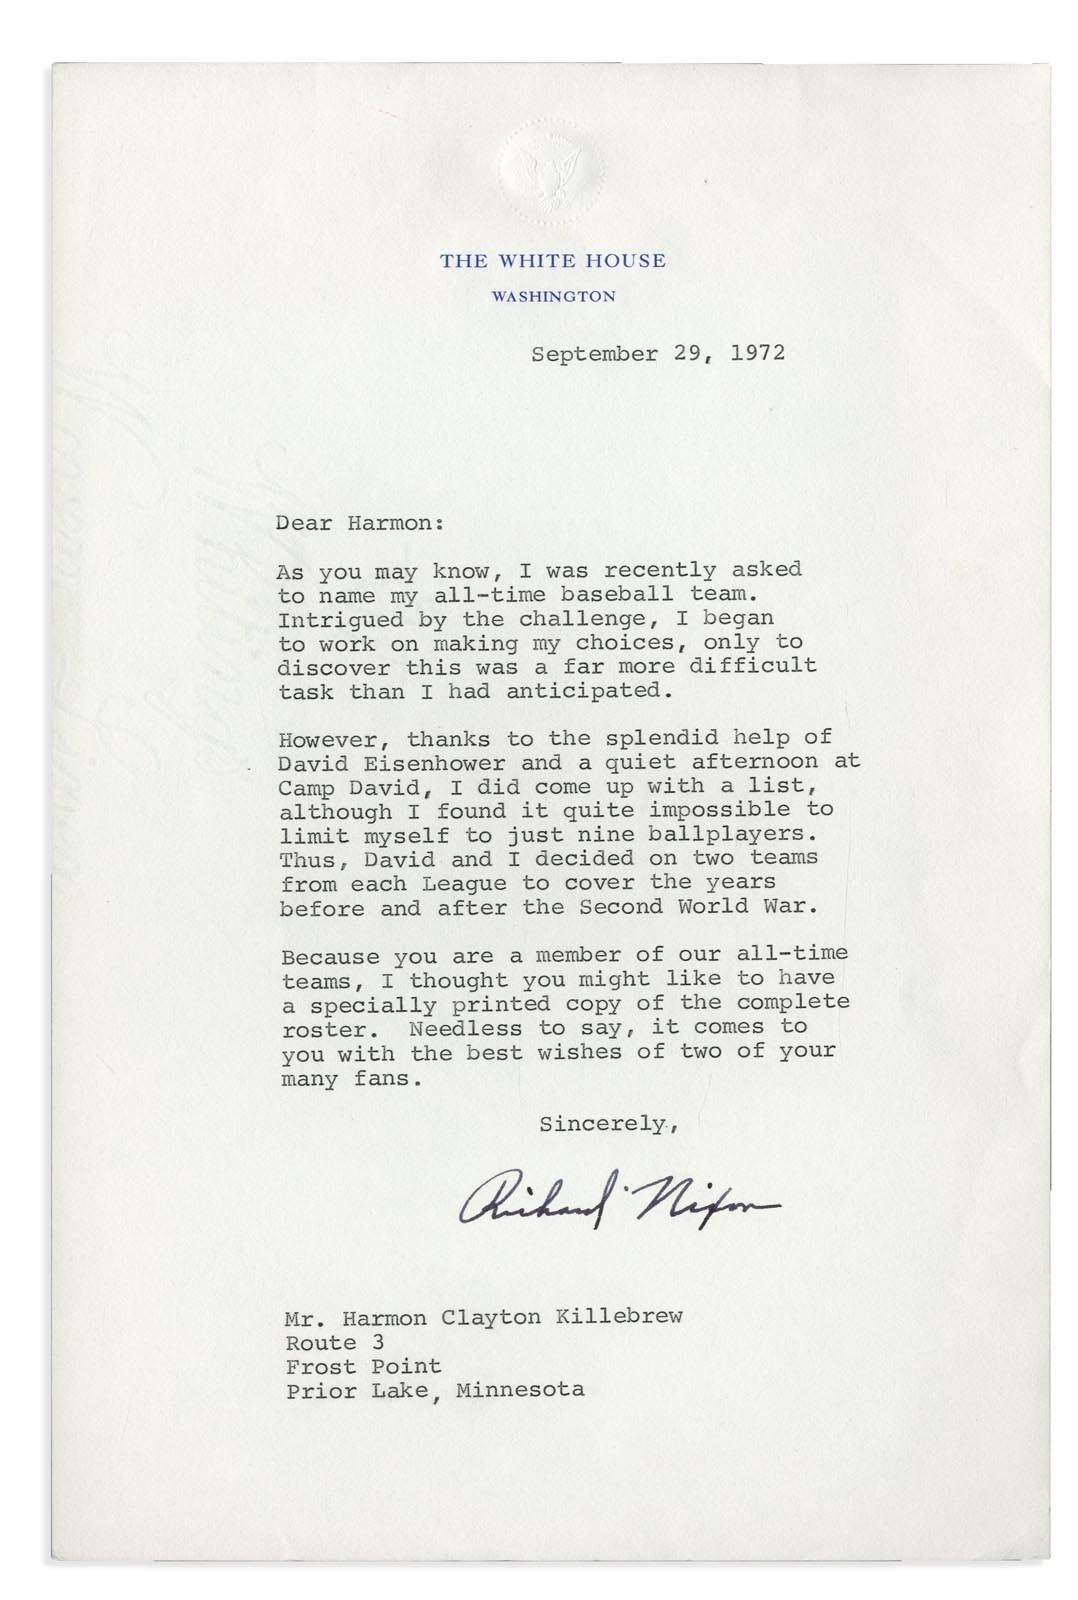 Baseball Autographs - 1972 Richard Nixon "President's All Time Baseball Team" Letter to Harmon Killebrew (Secretarial)